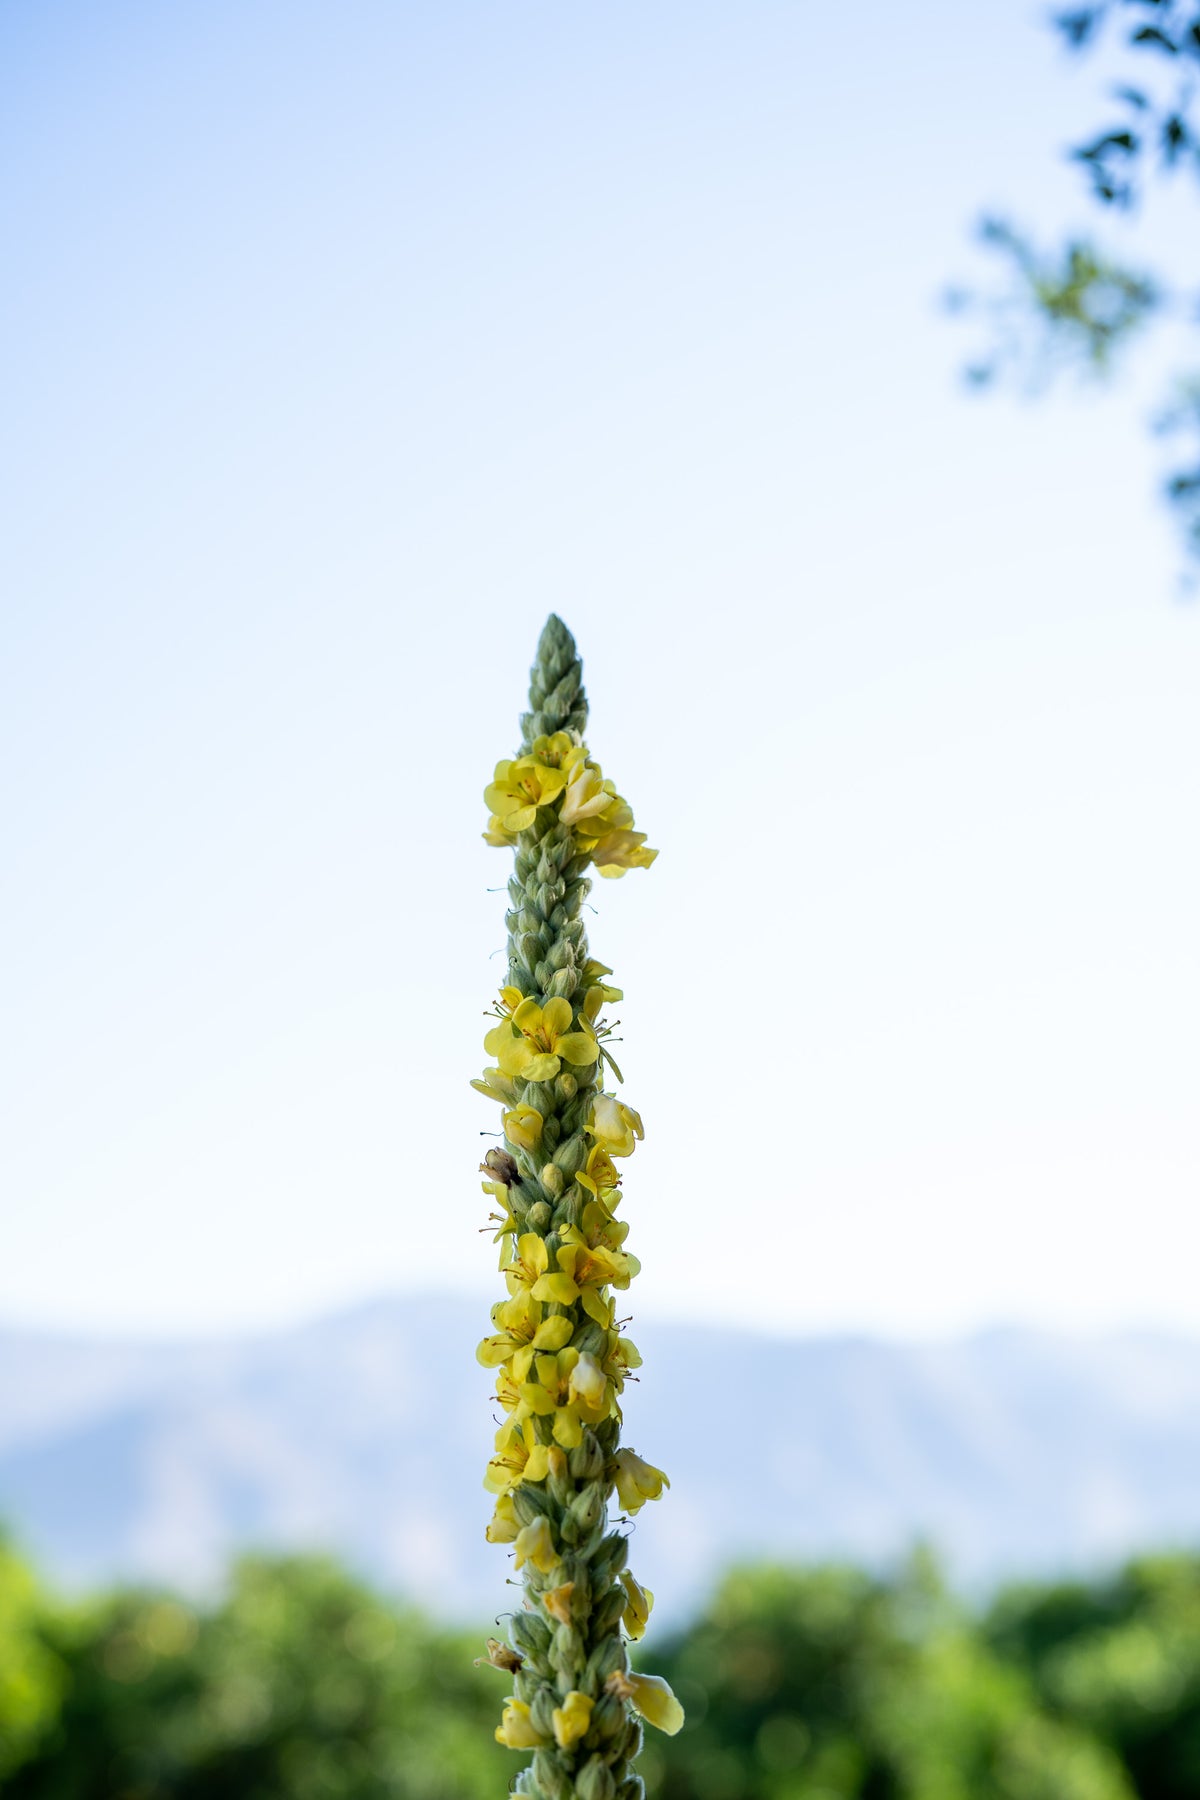 Common Mullein Flower stalk reaching the sky